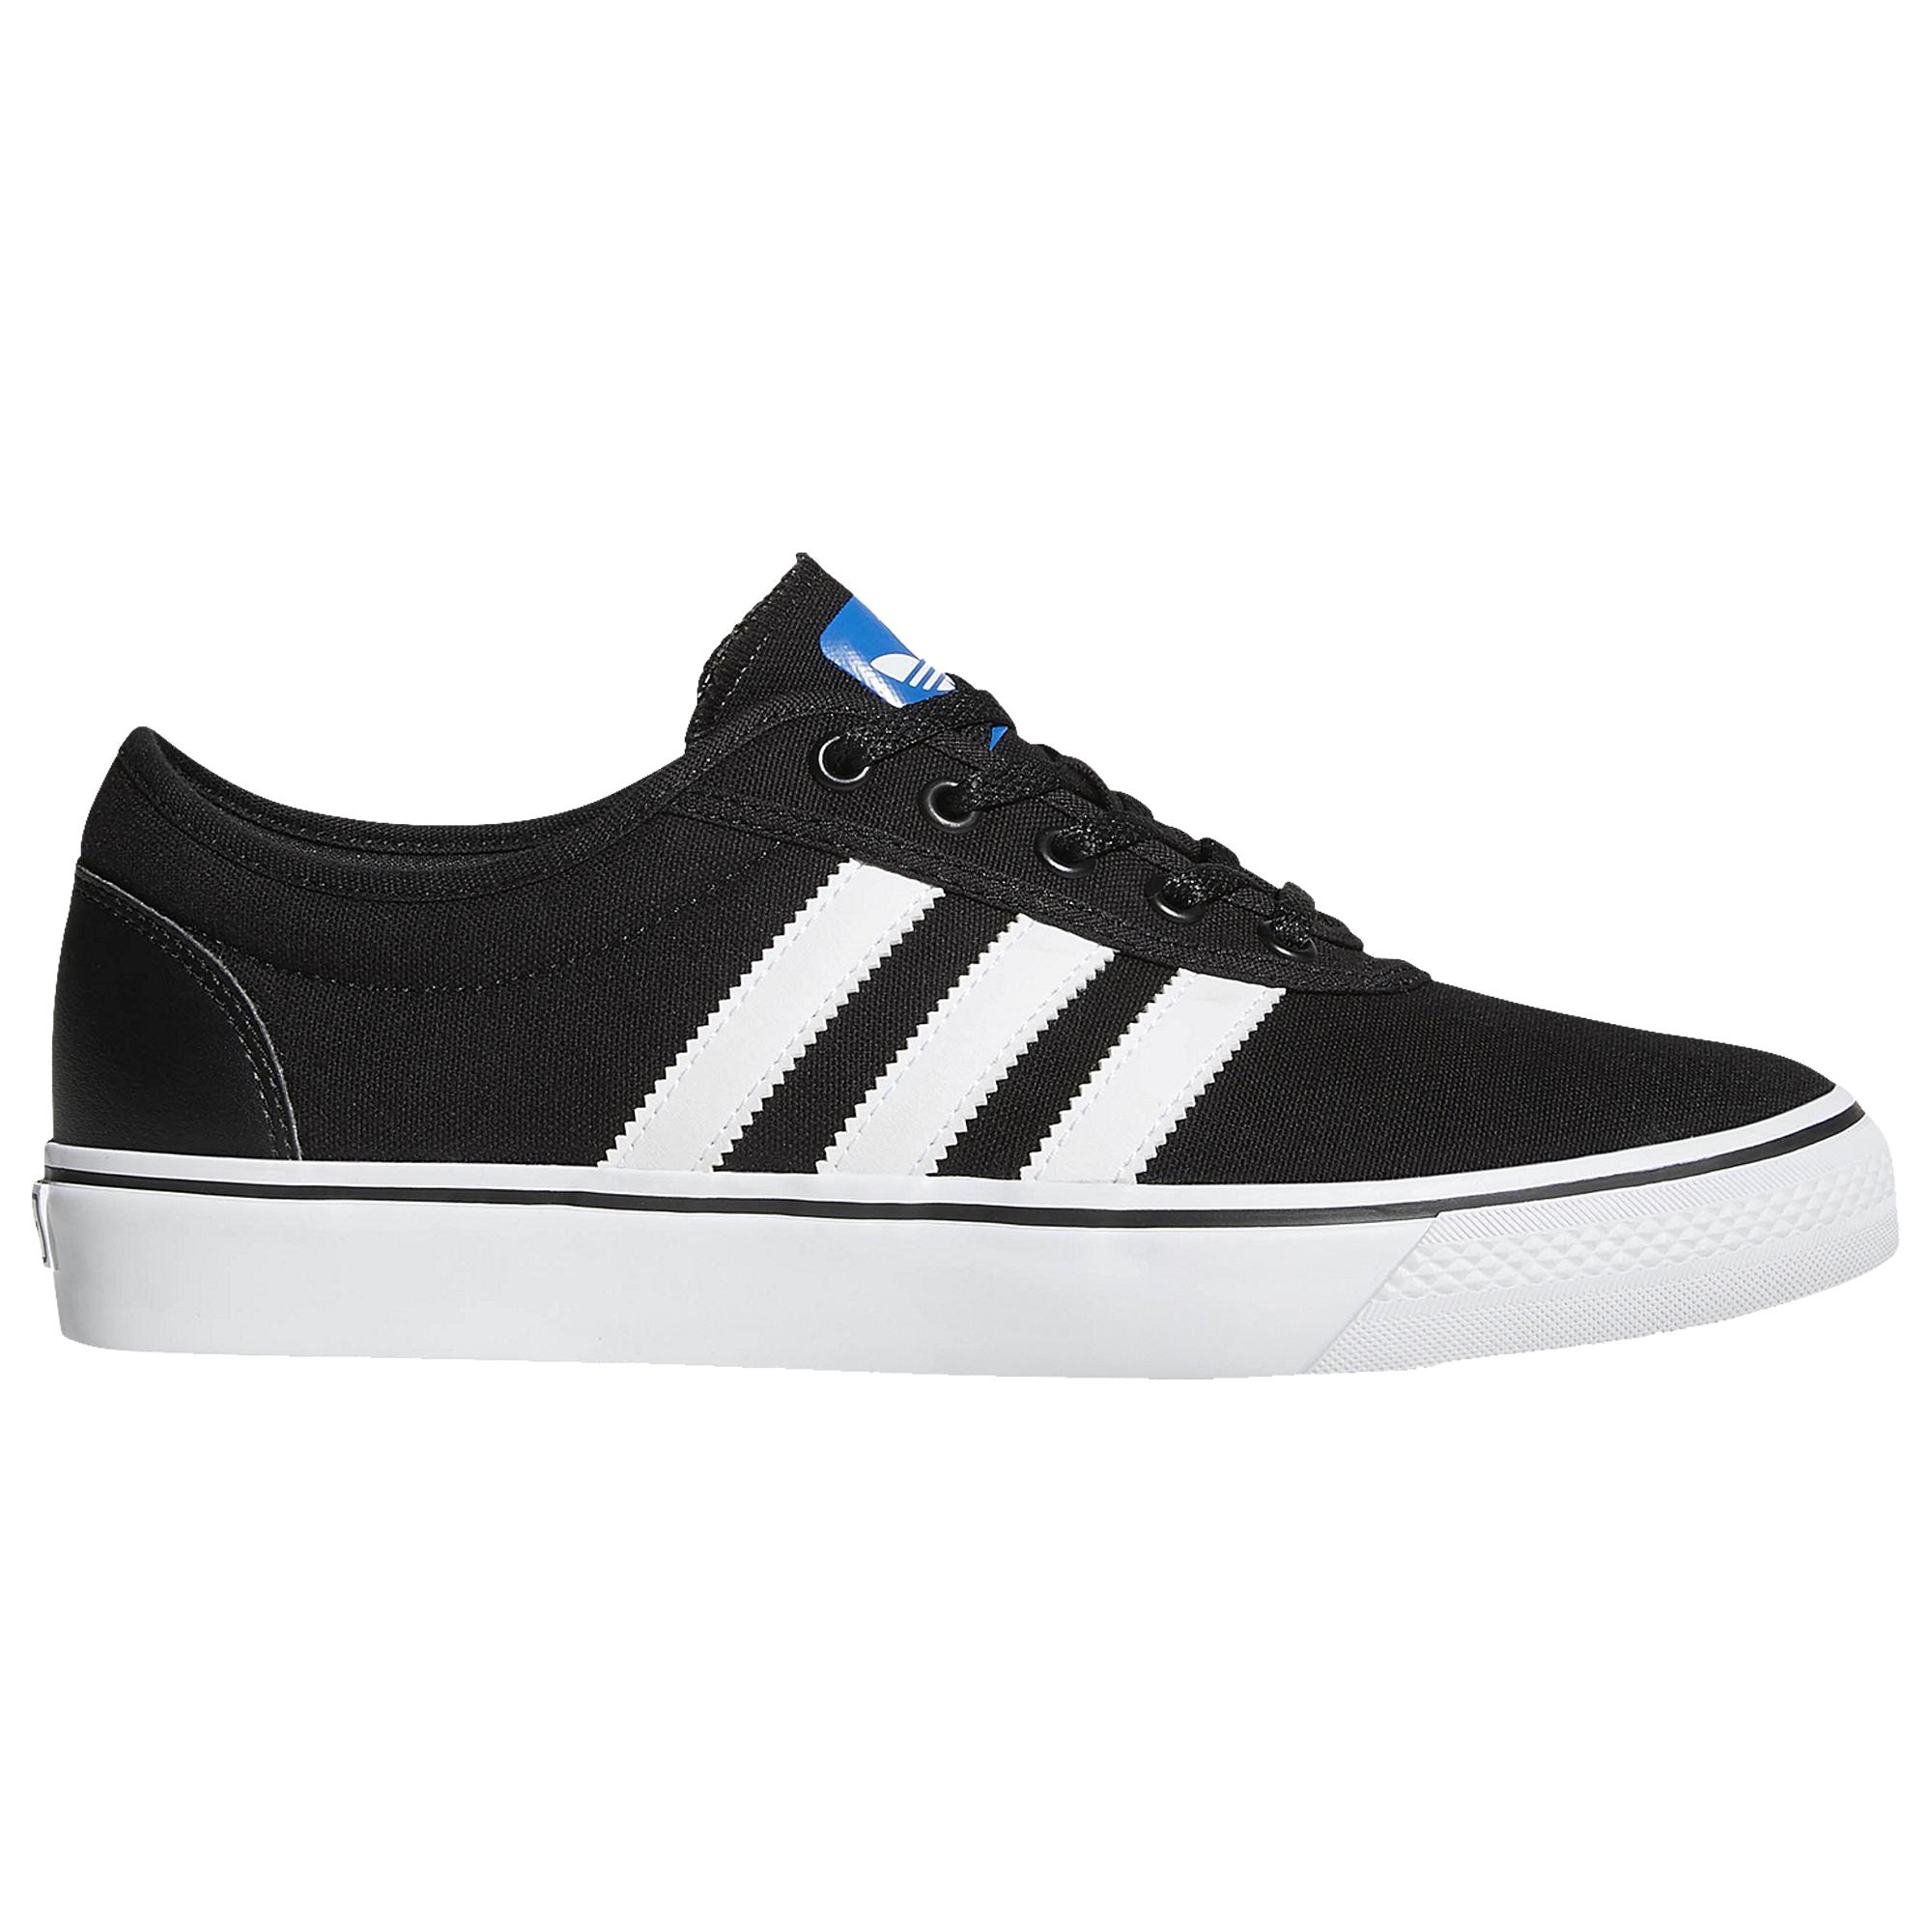 adidas Originals Suede Adi-ease Skate/bmx Shoes in Black/White (Black) for  Men - Lyst